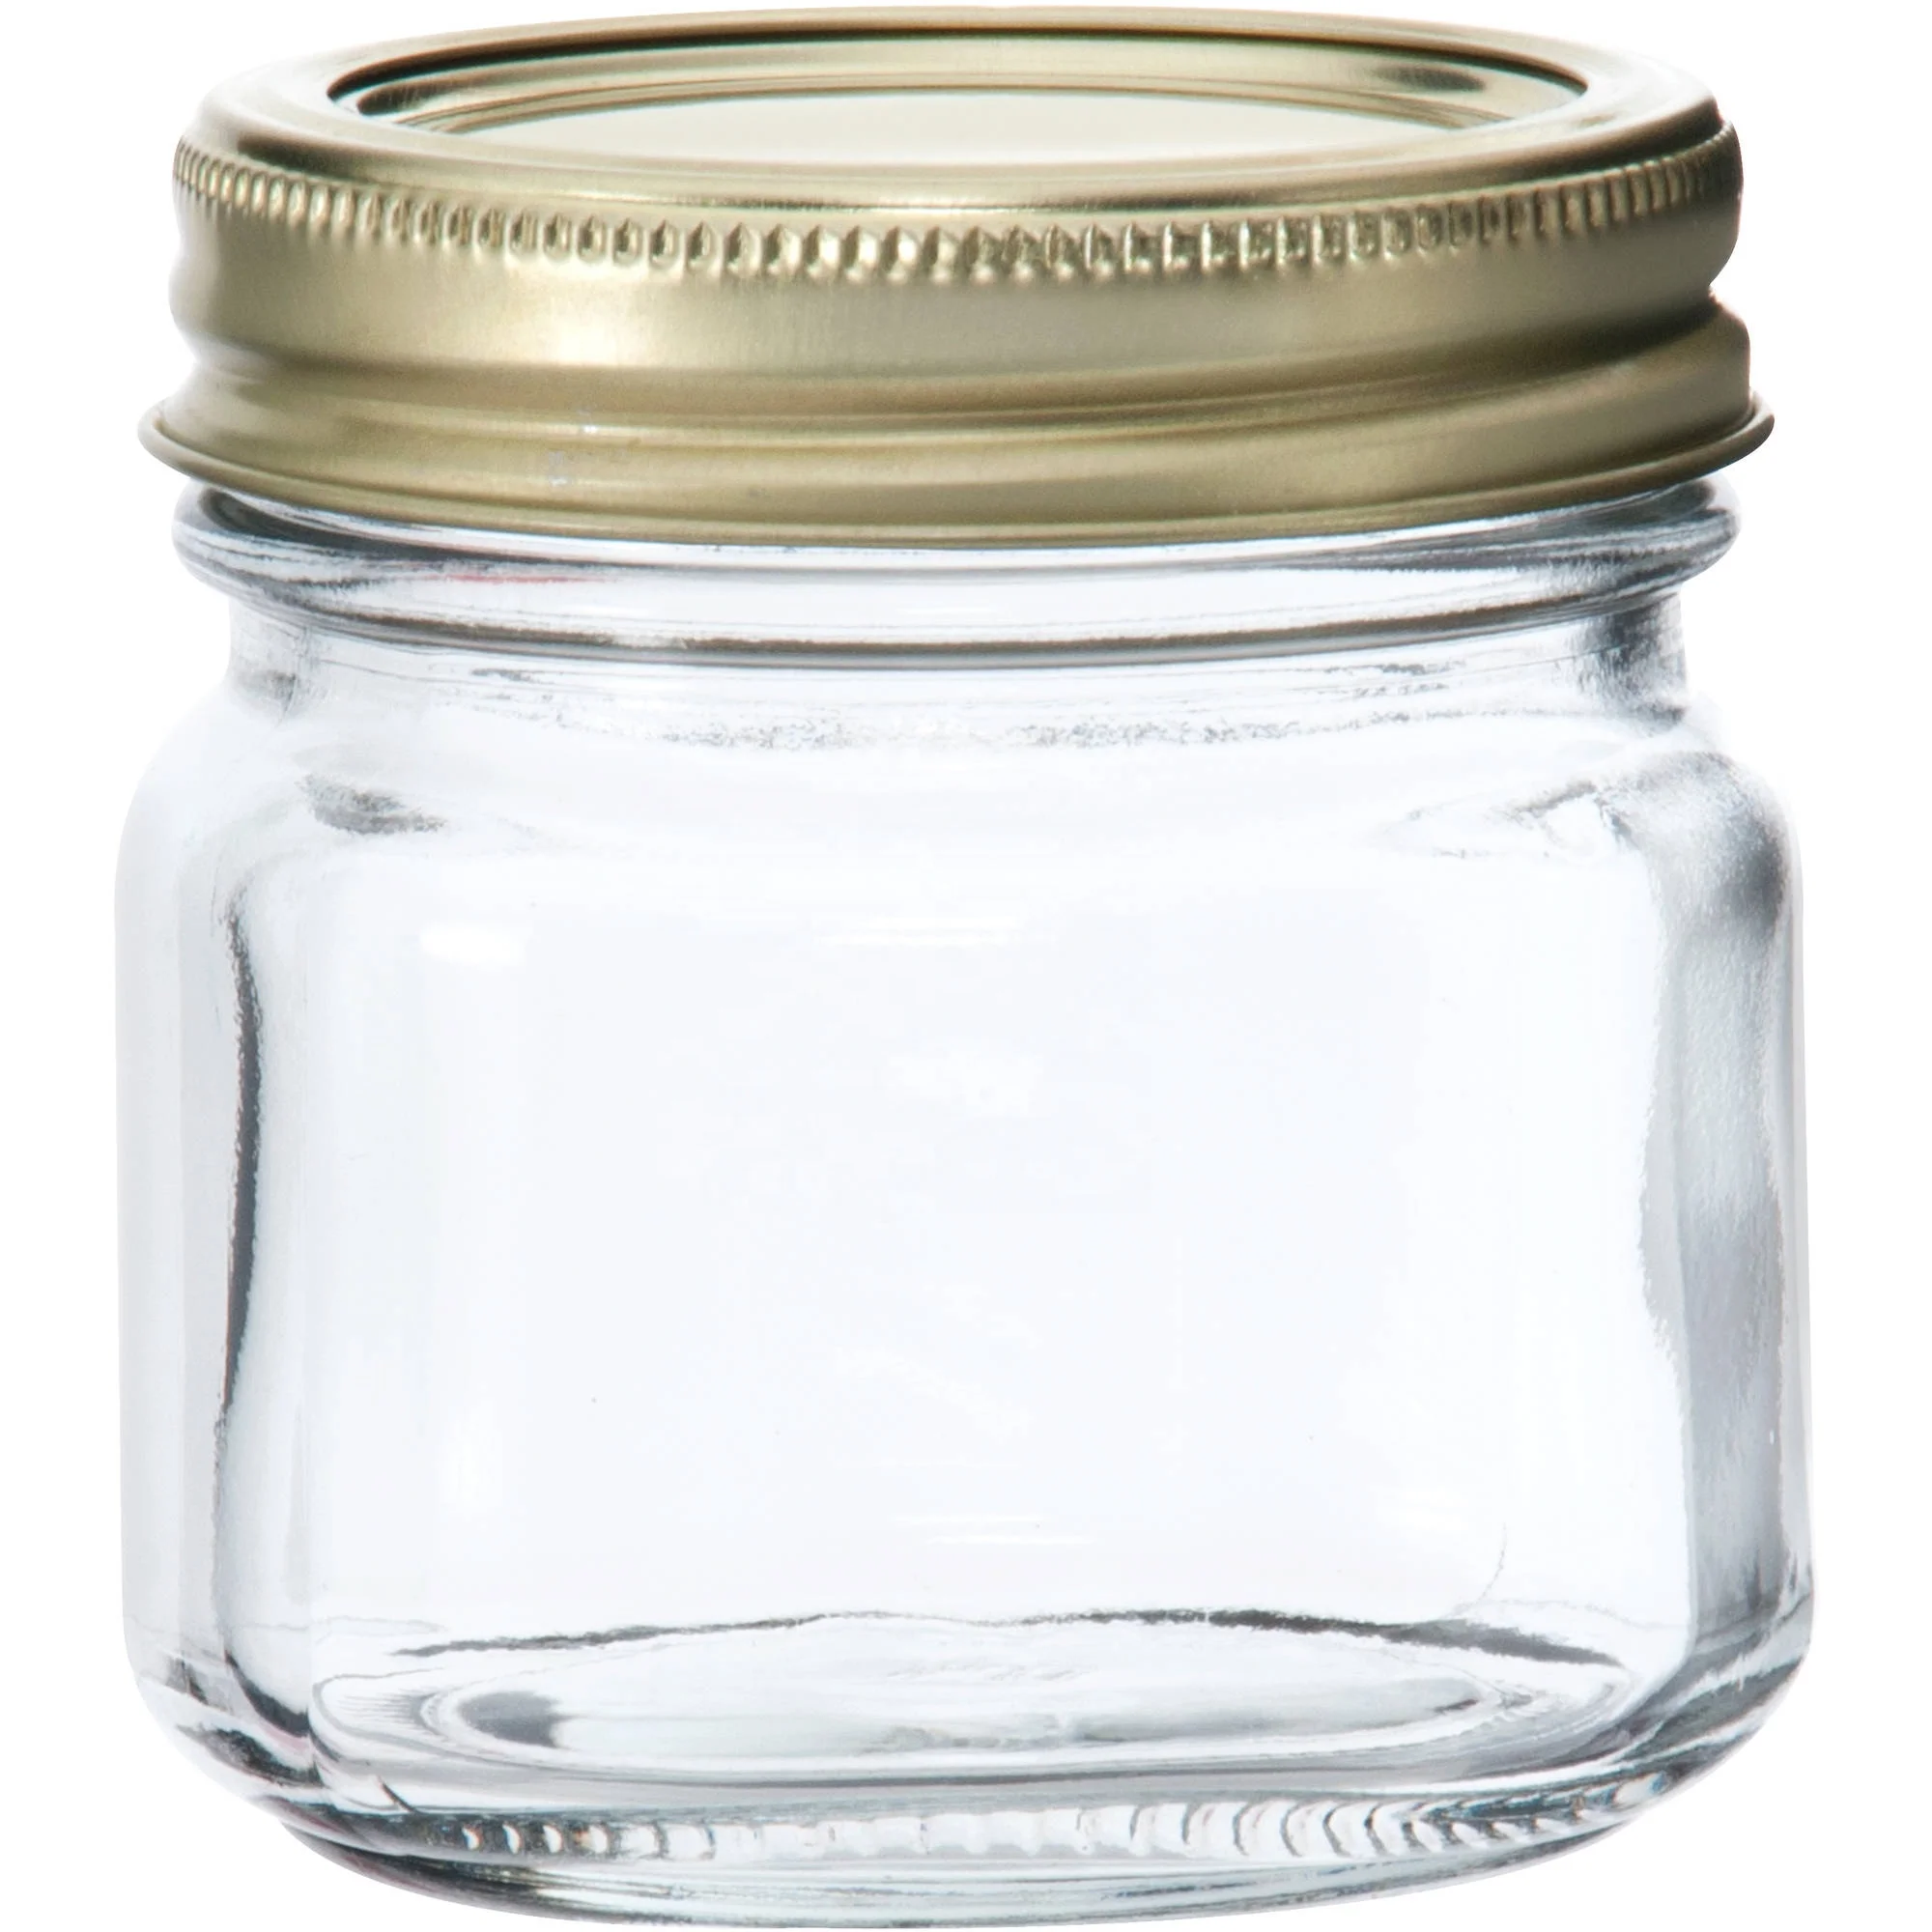 Fill in carton jar bottle bowl. Банки стеклянные. Стеклянные баночки. Баночка с крышкой. Банка стеклянная.